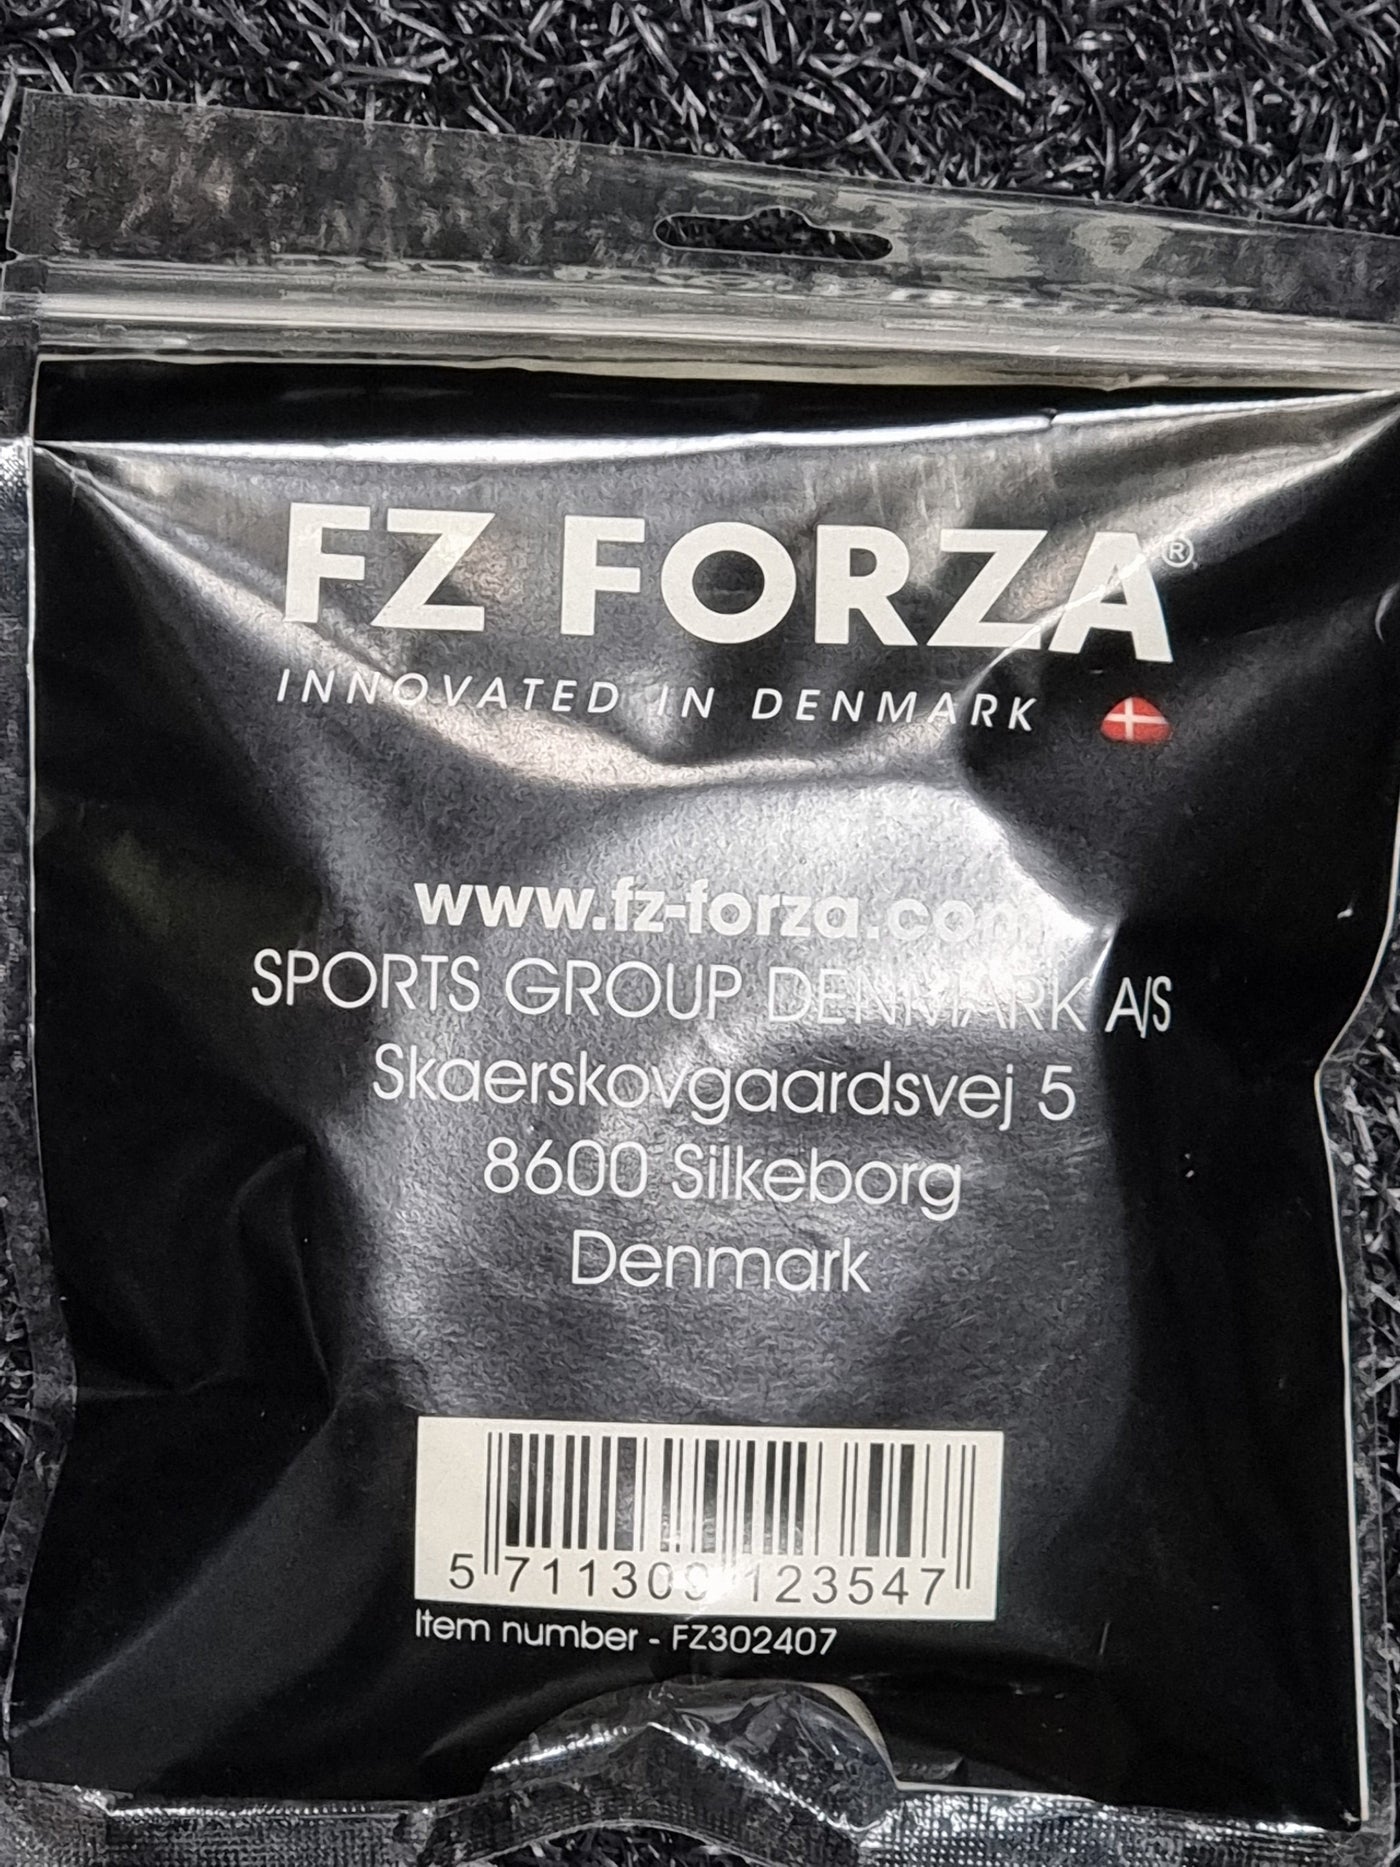 FZ Forza pro super grip reel- 10 pcs